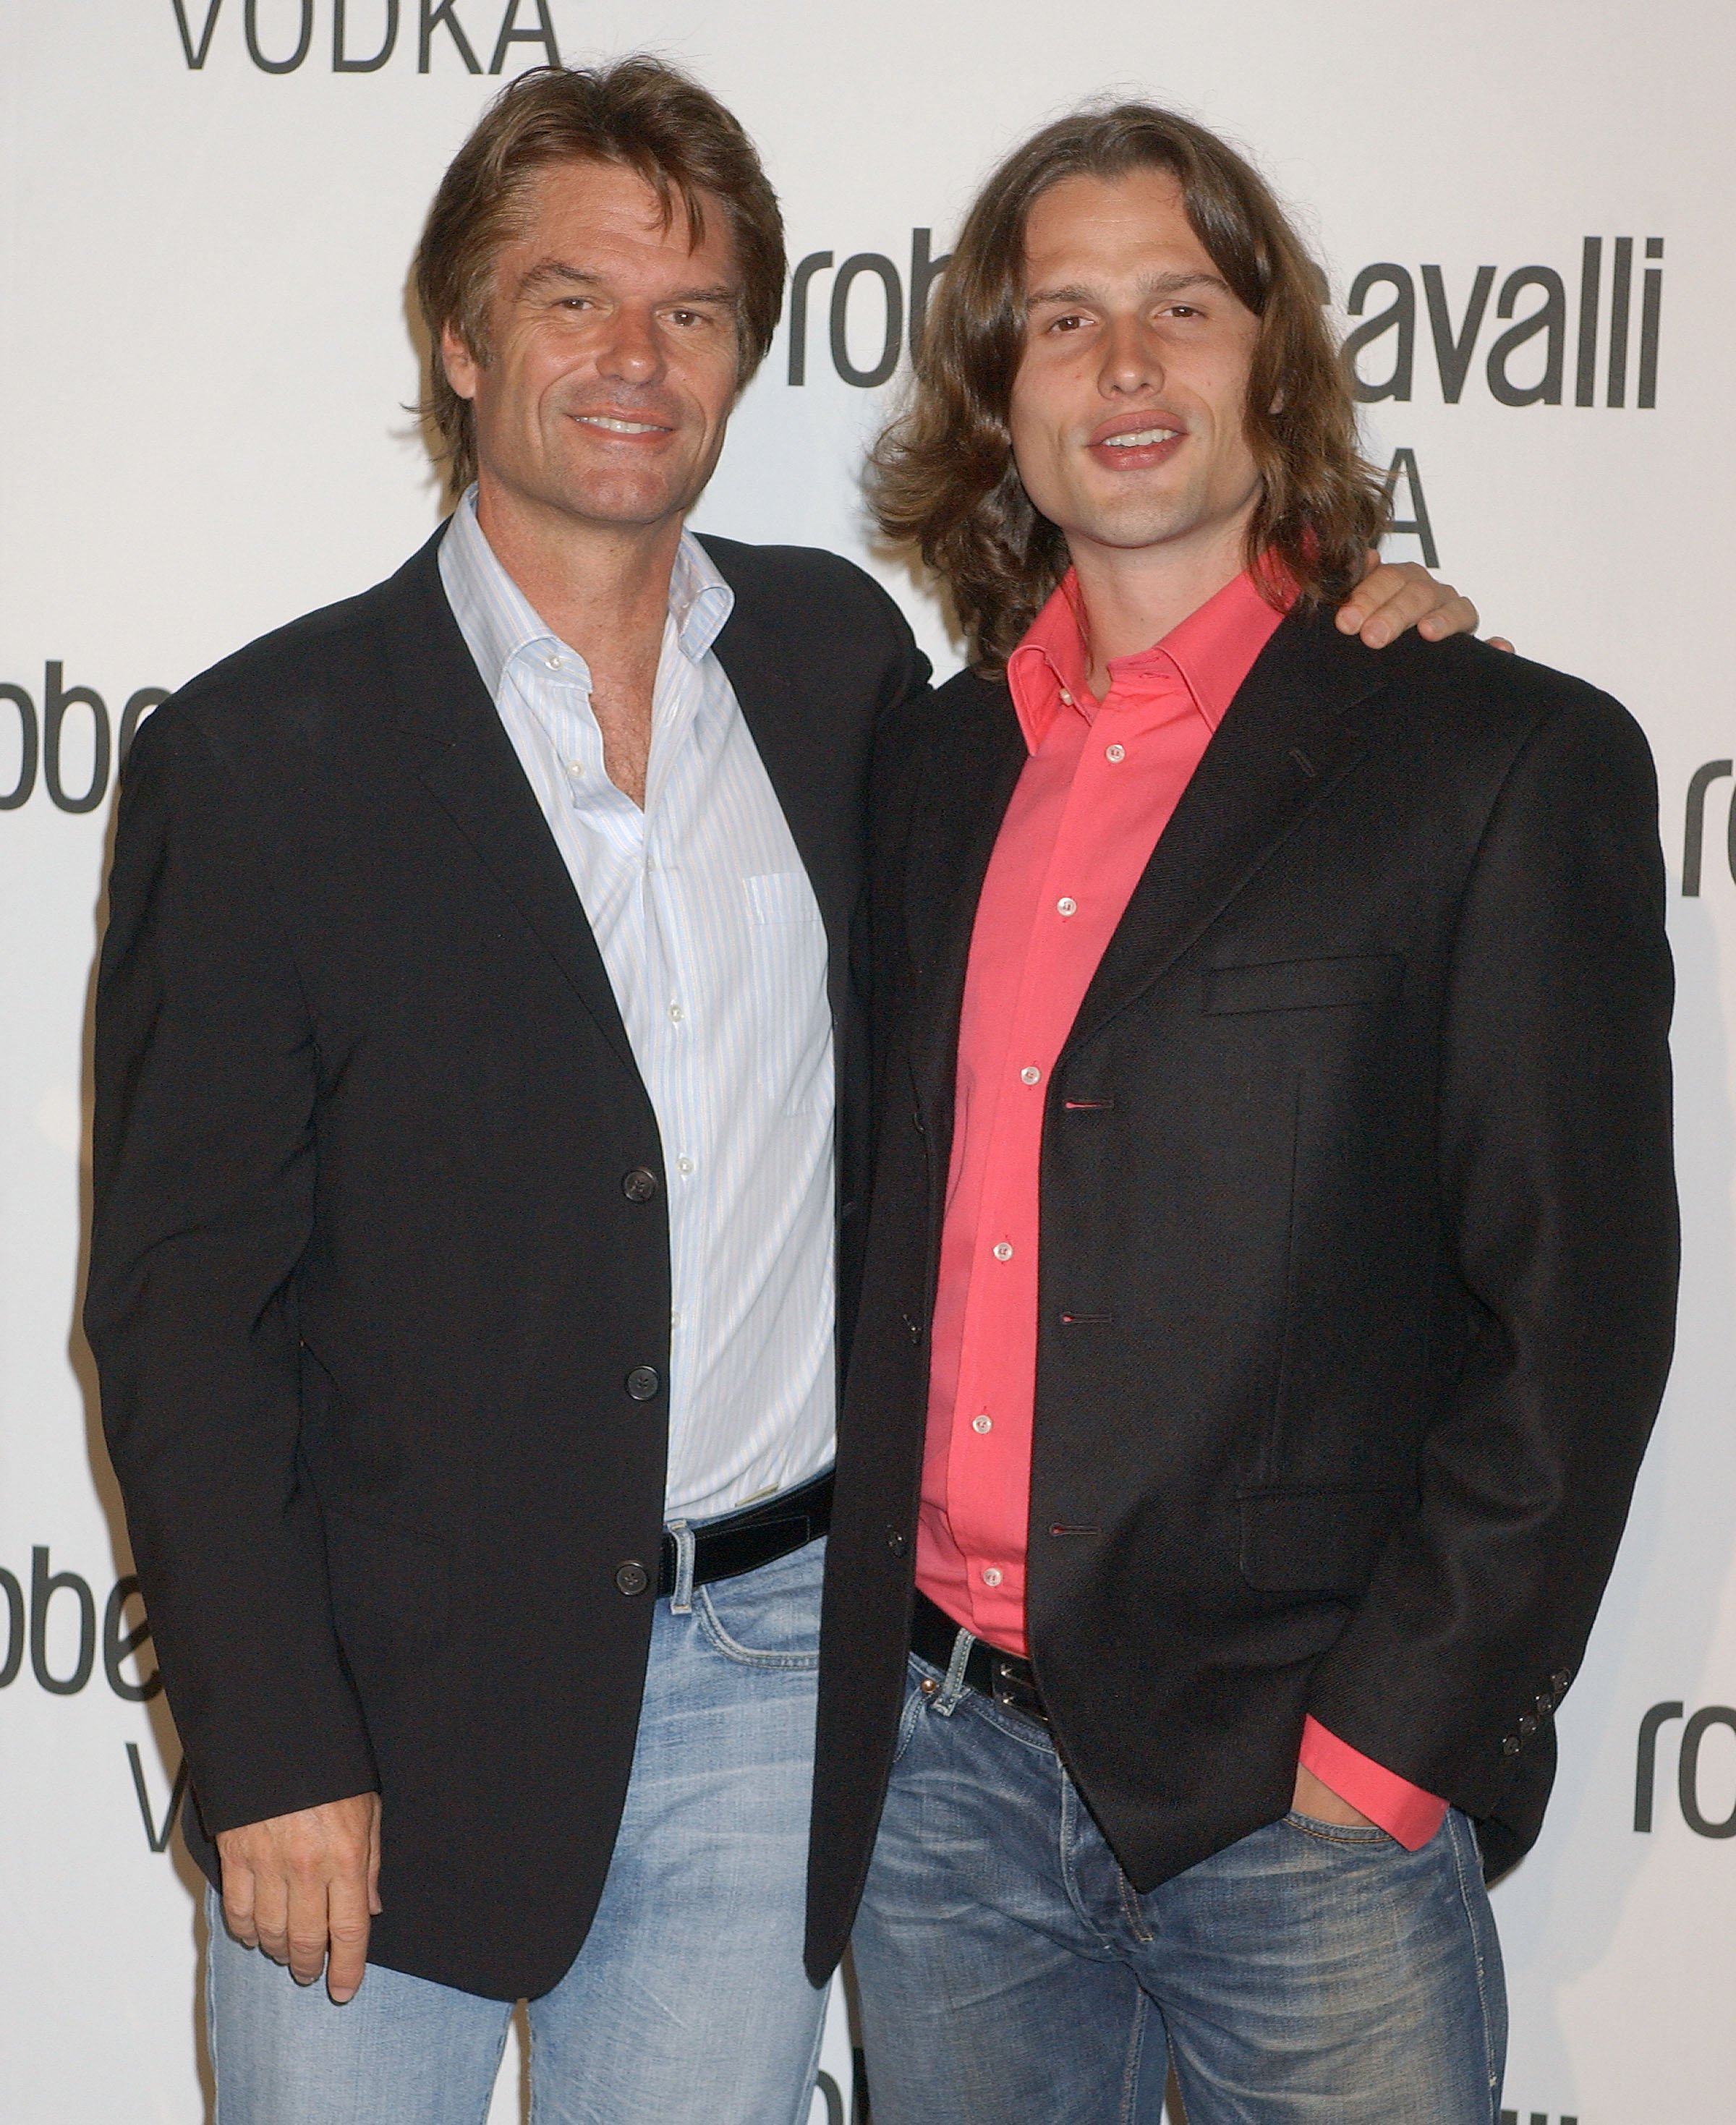 Harry Hamlin and Dimitri Hamlin at the launch of Roberto Cavalli's vodka in California. | Source: Getty Images